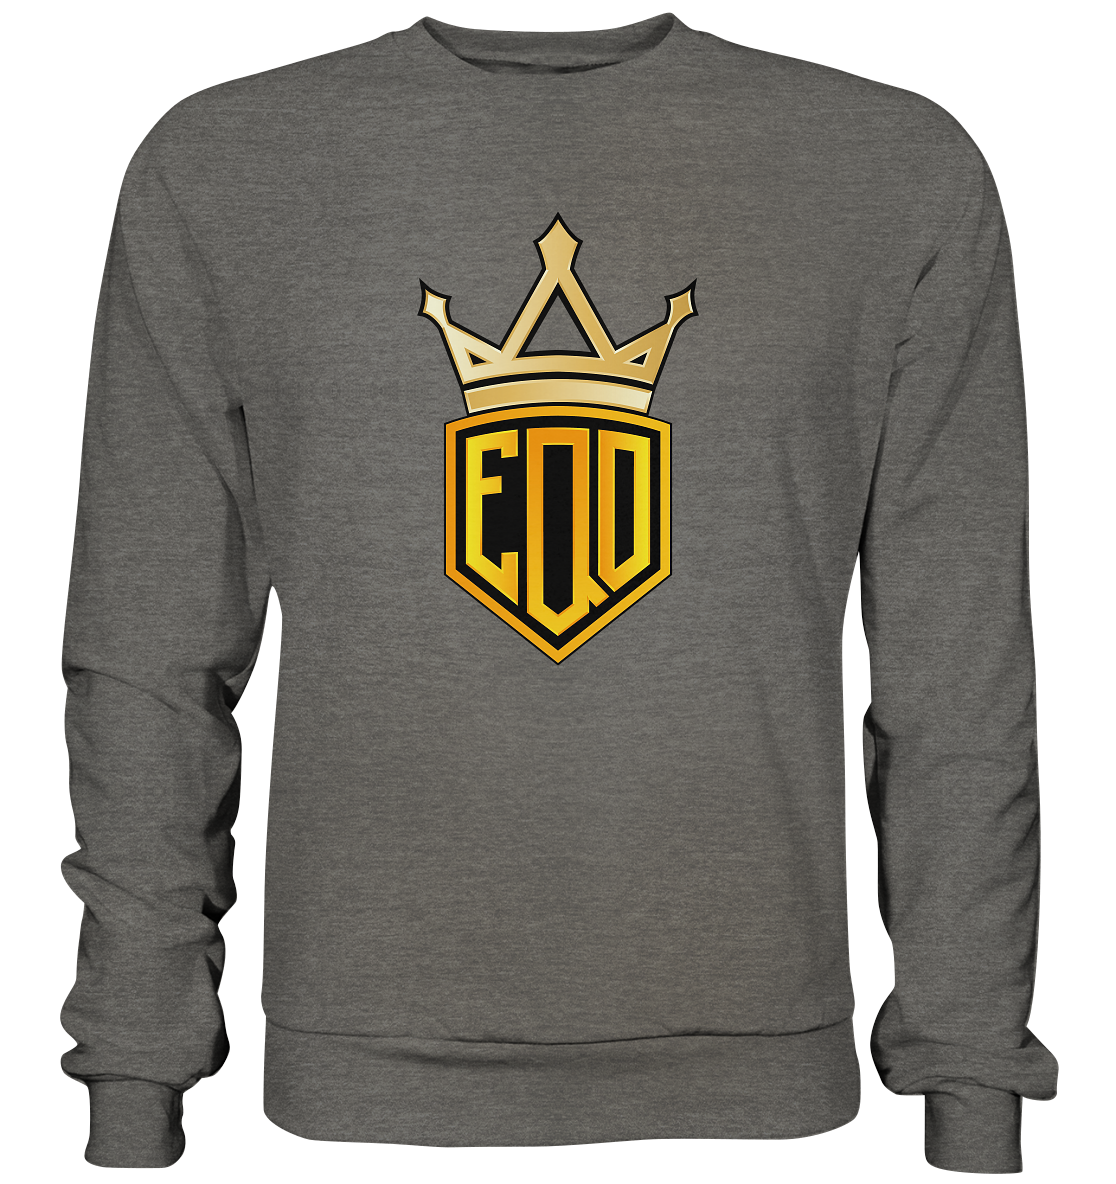 EQD - Basic Sweatshirt